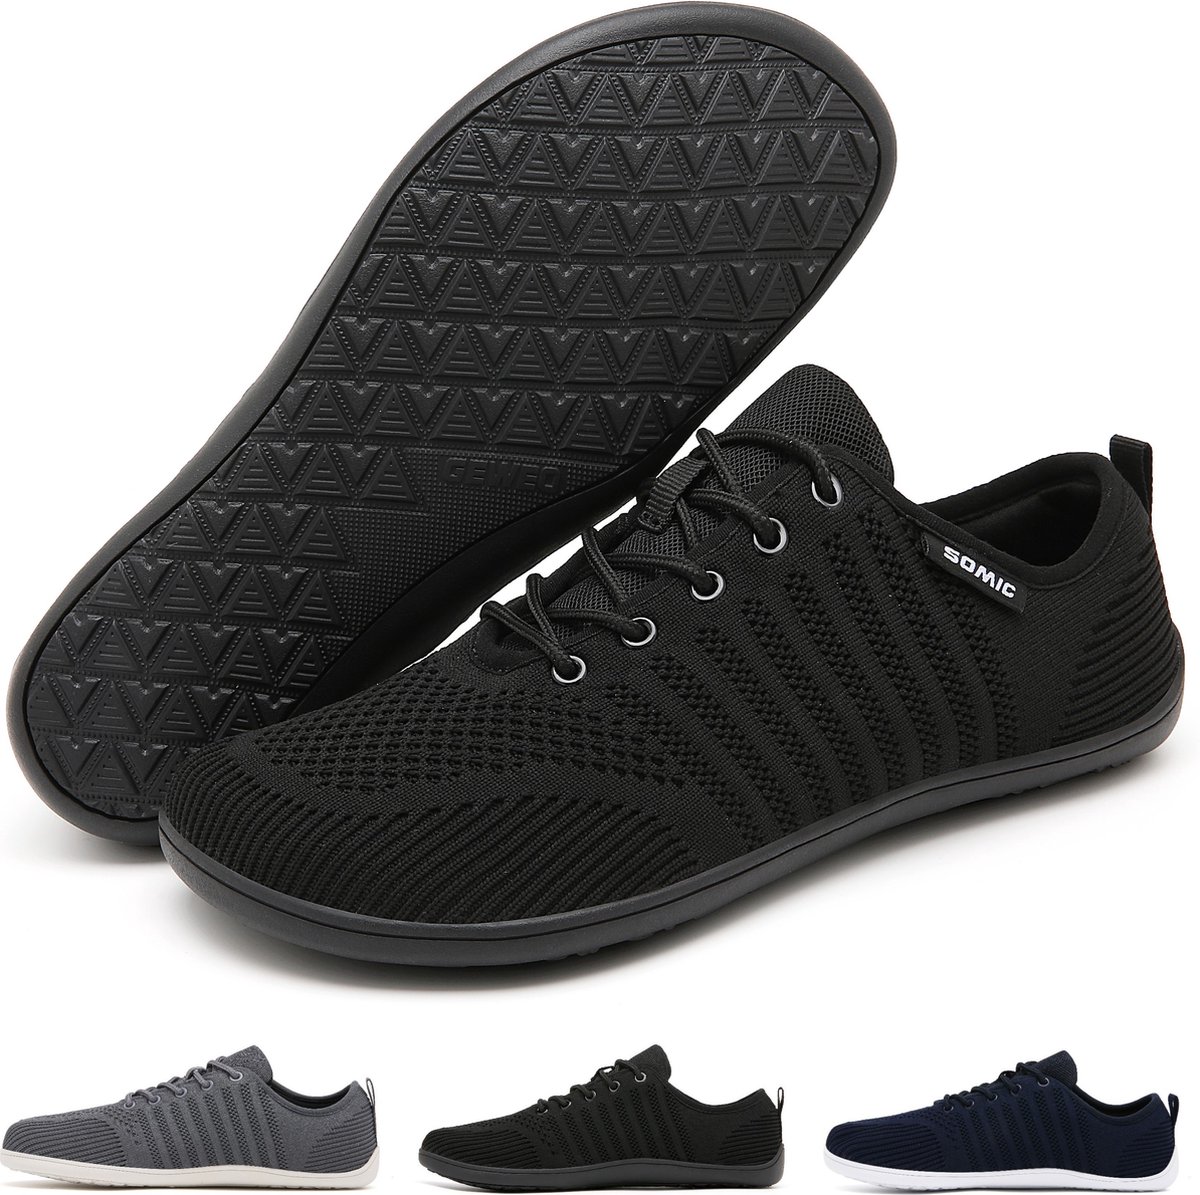 Somic Barefoot Schoenen - Sportschoenen Sneakers - Fitnessschoenen - Hardloopschoenen - Ademend Knit Textiel - Platte Zool - Zwart - Maat 40